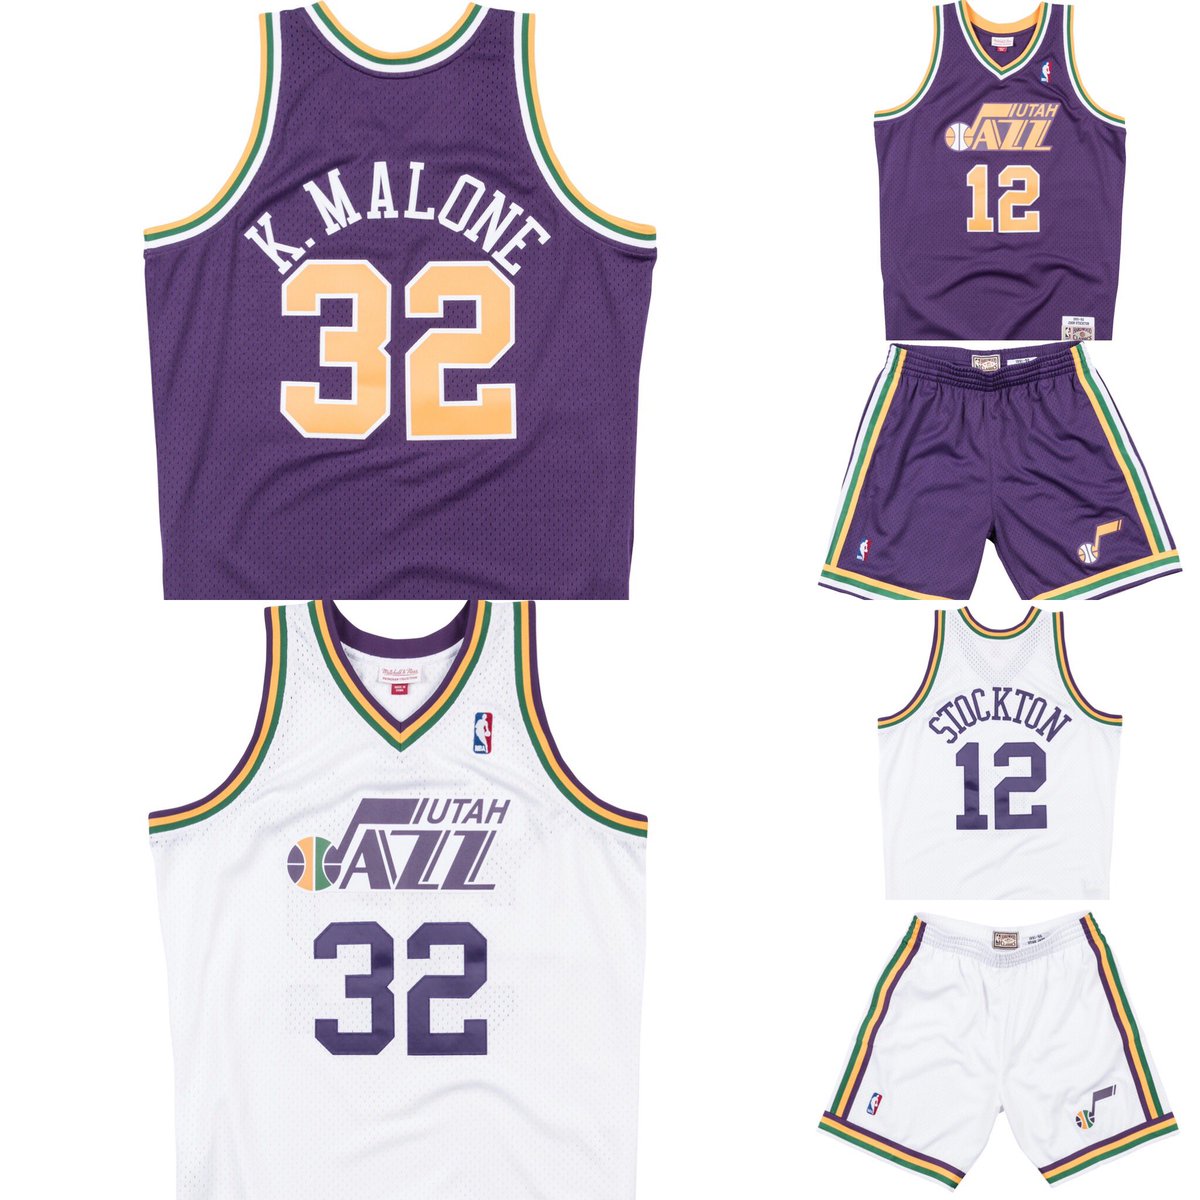 Utah Jazz unveil purple '90s throwback jerseys, tease more uniform